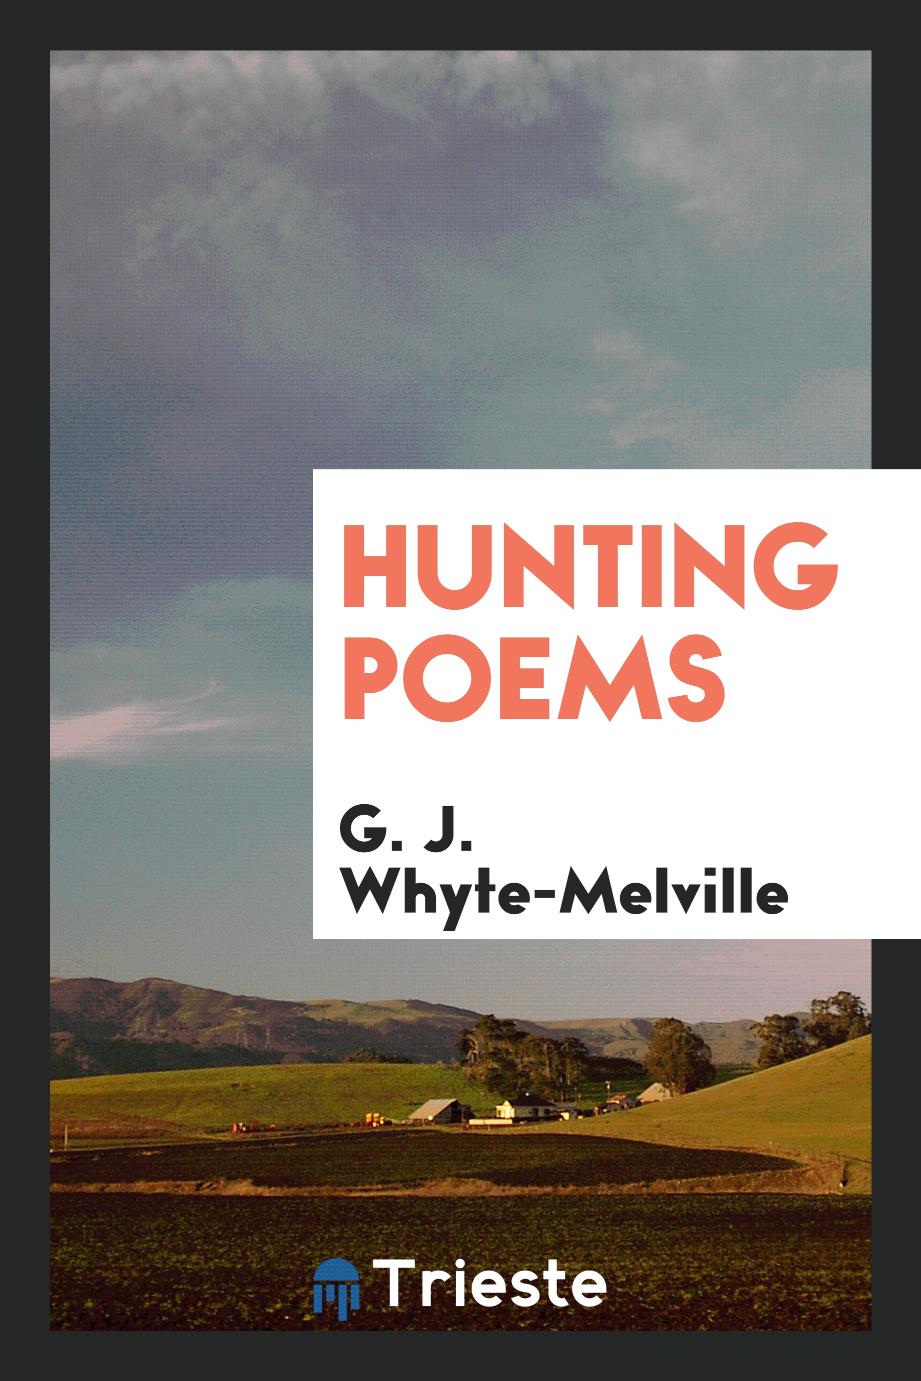 Hunting poems